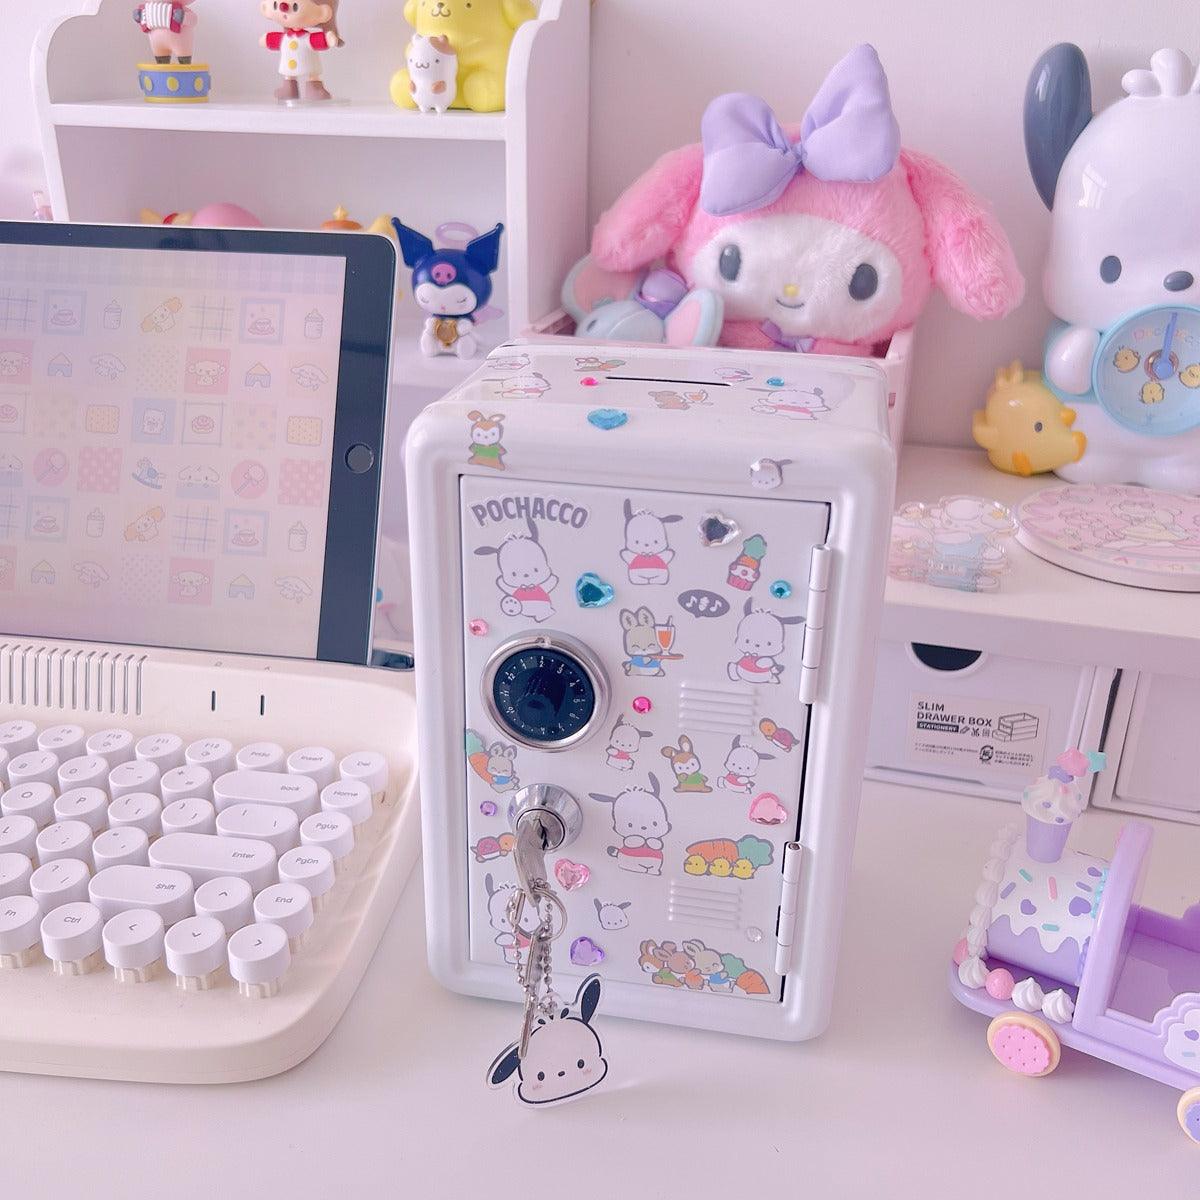 Sanrio Safe Box Desktop Organizer with Piggy Bank Functionality - In Kawaii Shop